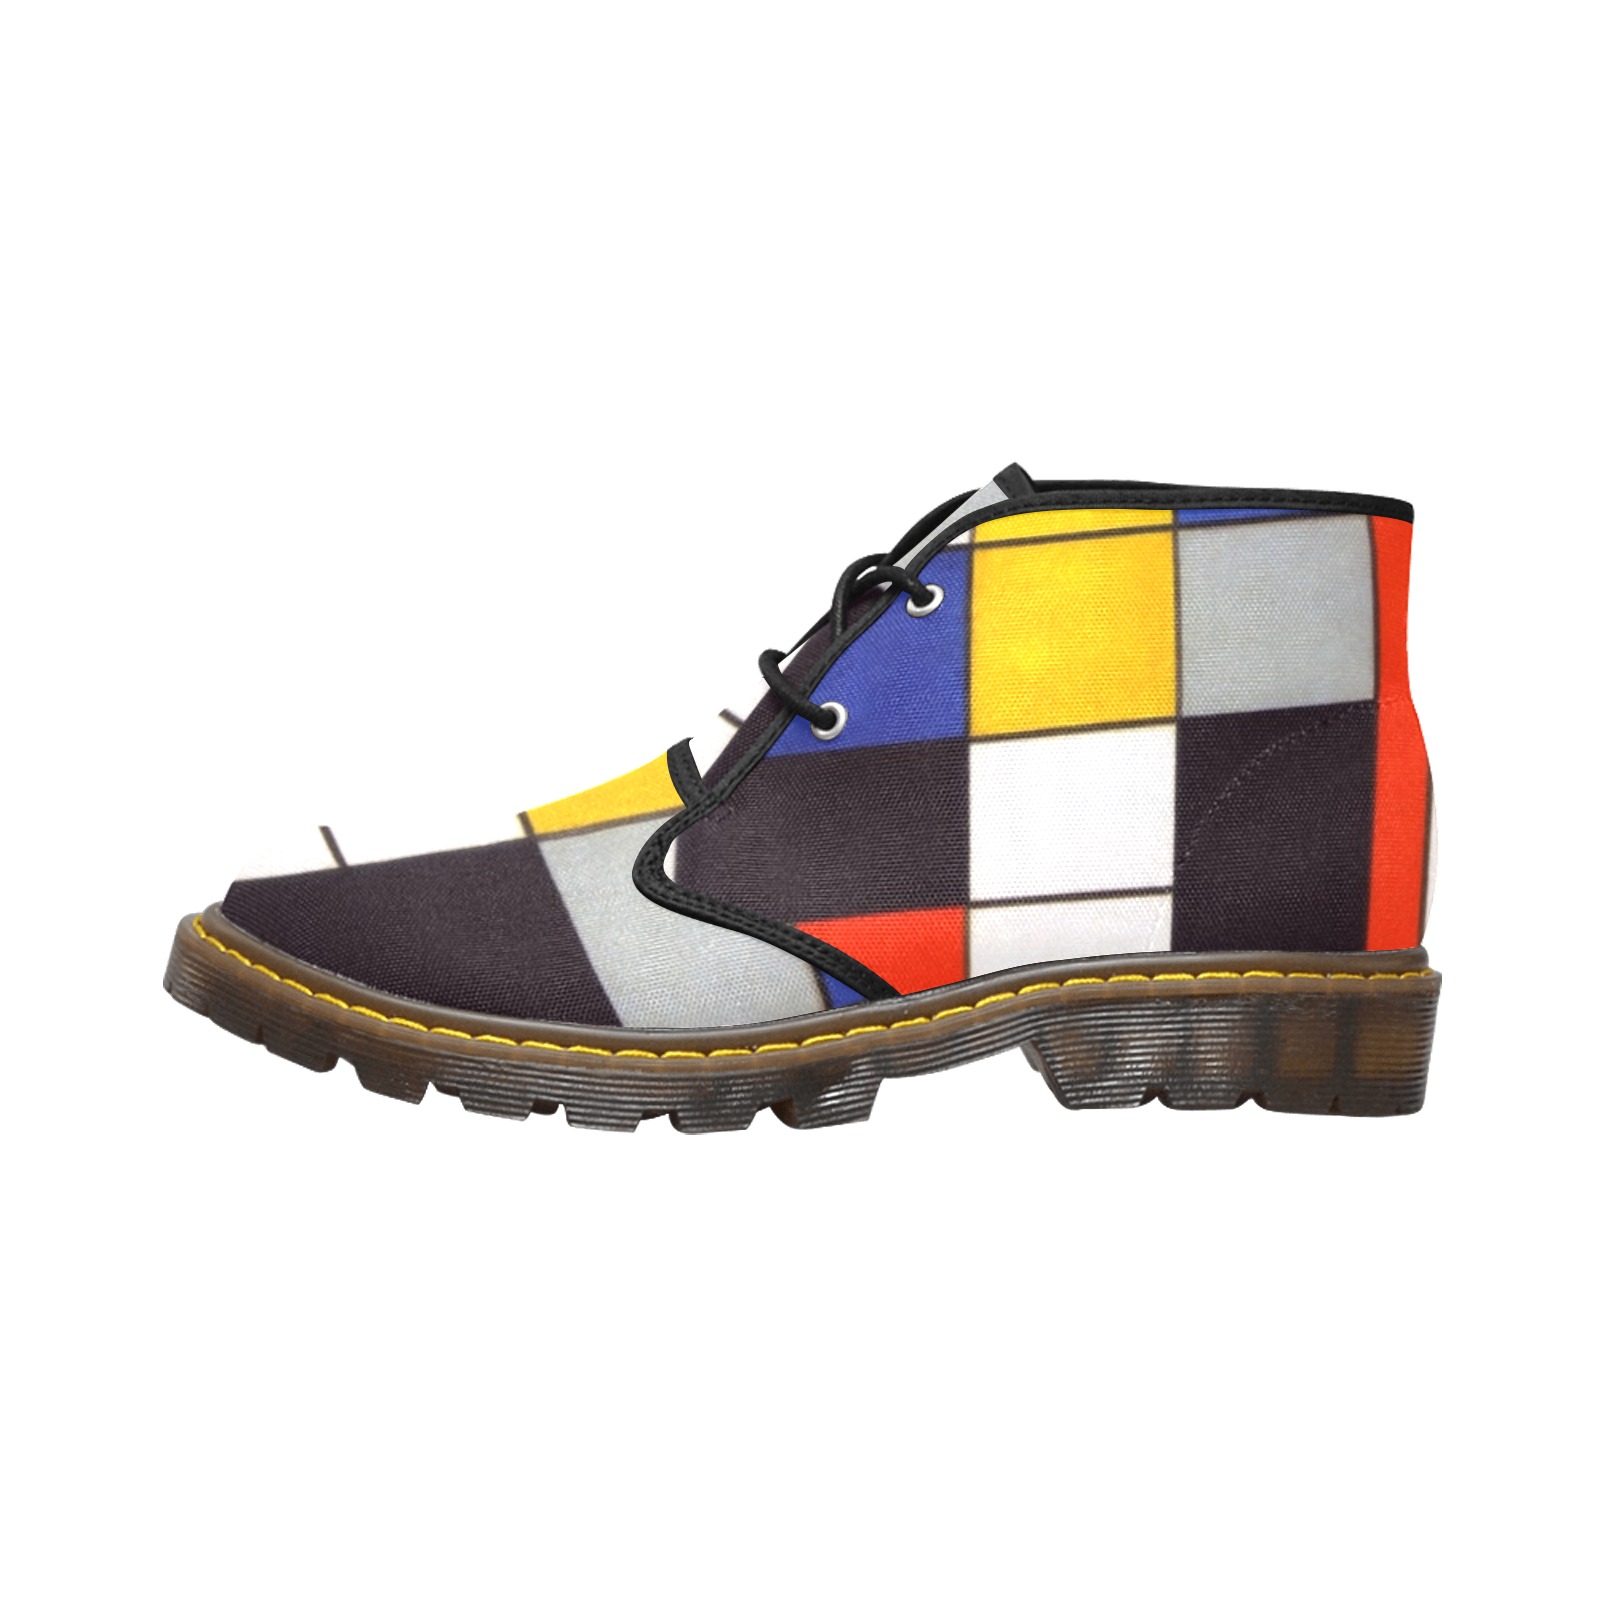 Composition A by Piet Mondrian Women's Canvas Chukka Boots (Model 2402-1)